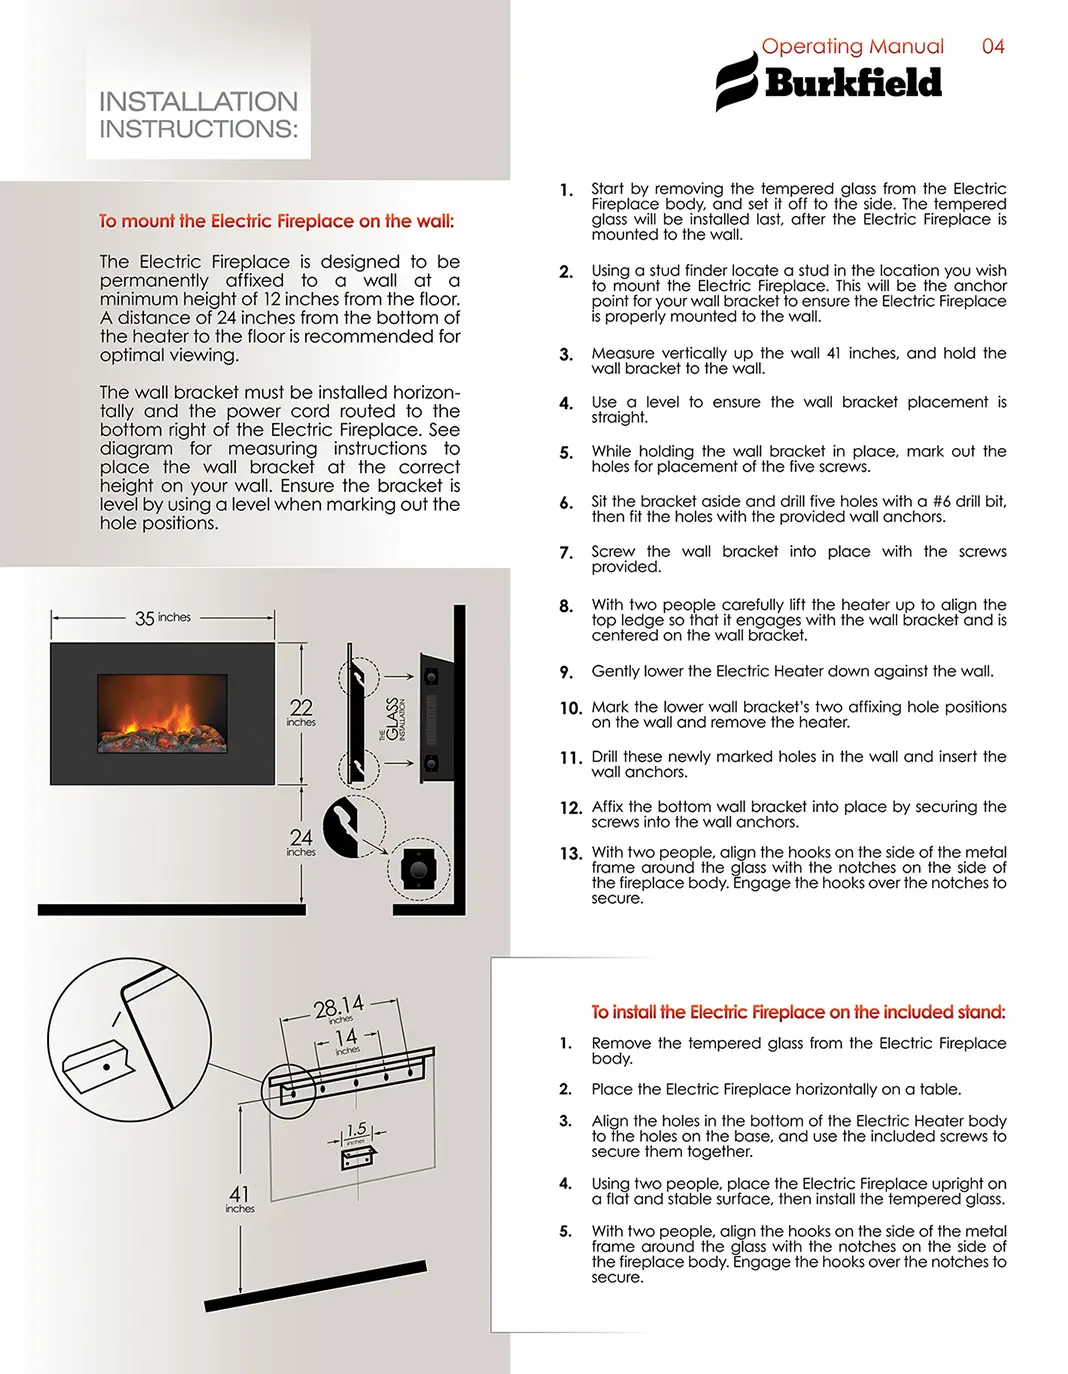 Burkfield Swonewall MW-350 Operating Manual: Page #4: Operating Instructions